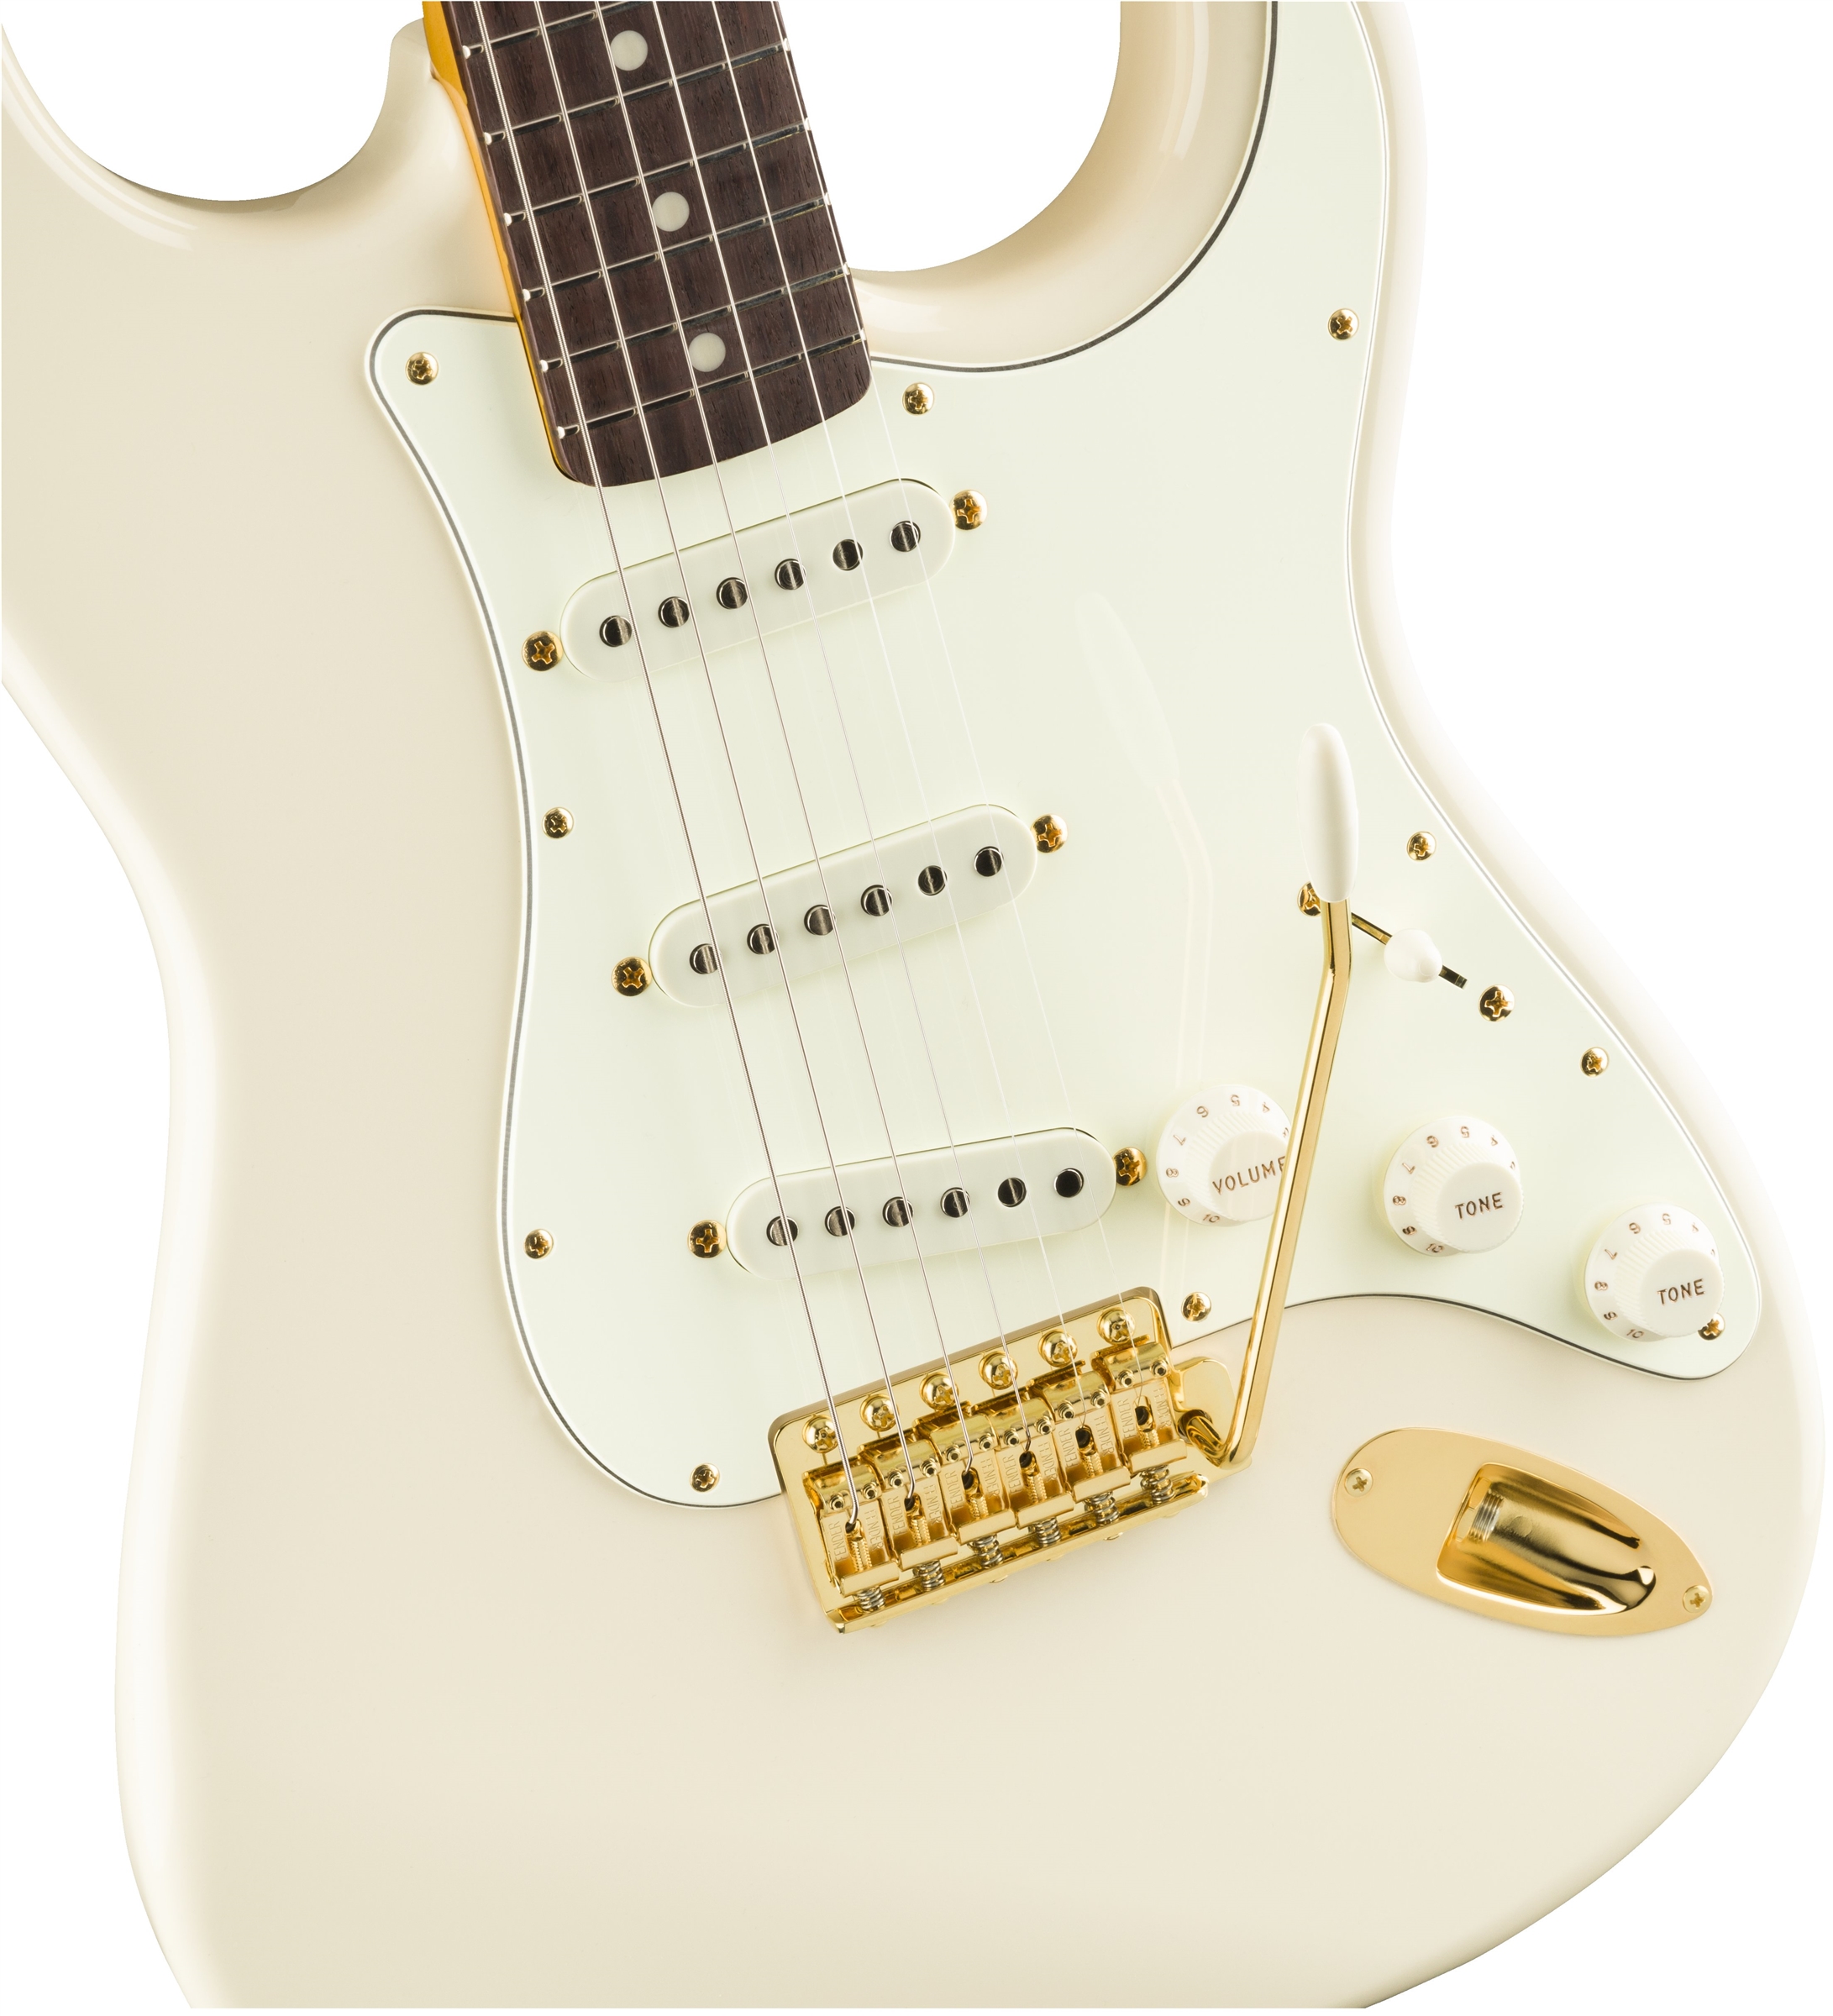 Fender Strat Daybreak Ltd 2019 Japon Gh Rw - Olympic White - Guitare Électrique Forme Str - Variation 4